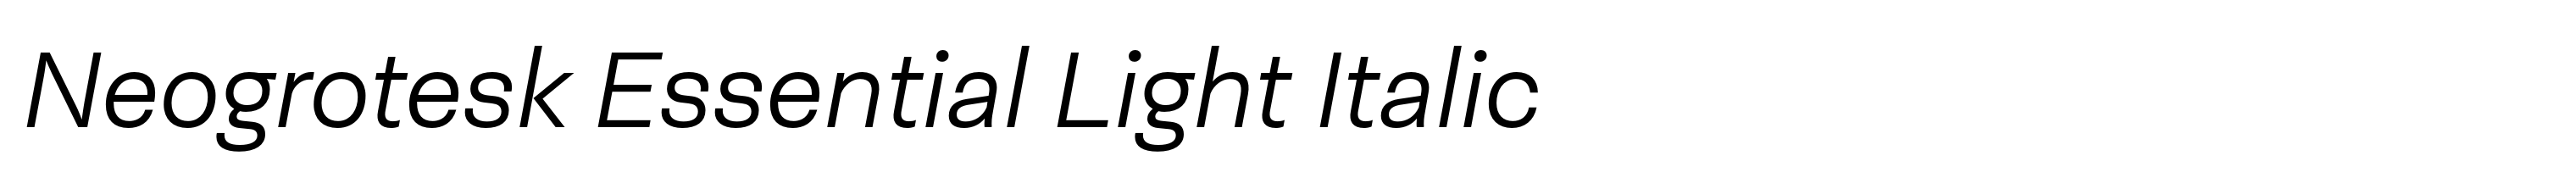 Neogrotesk Essential Light Italic